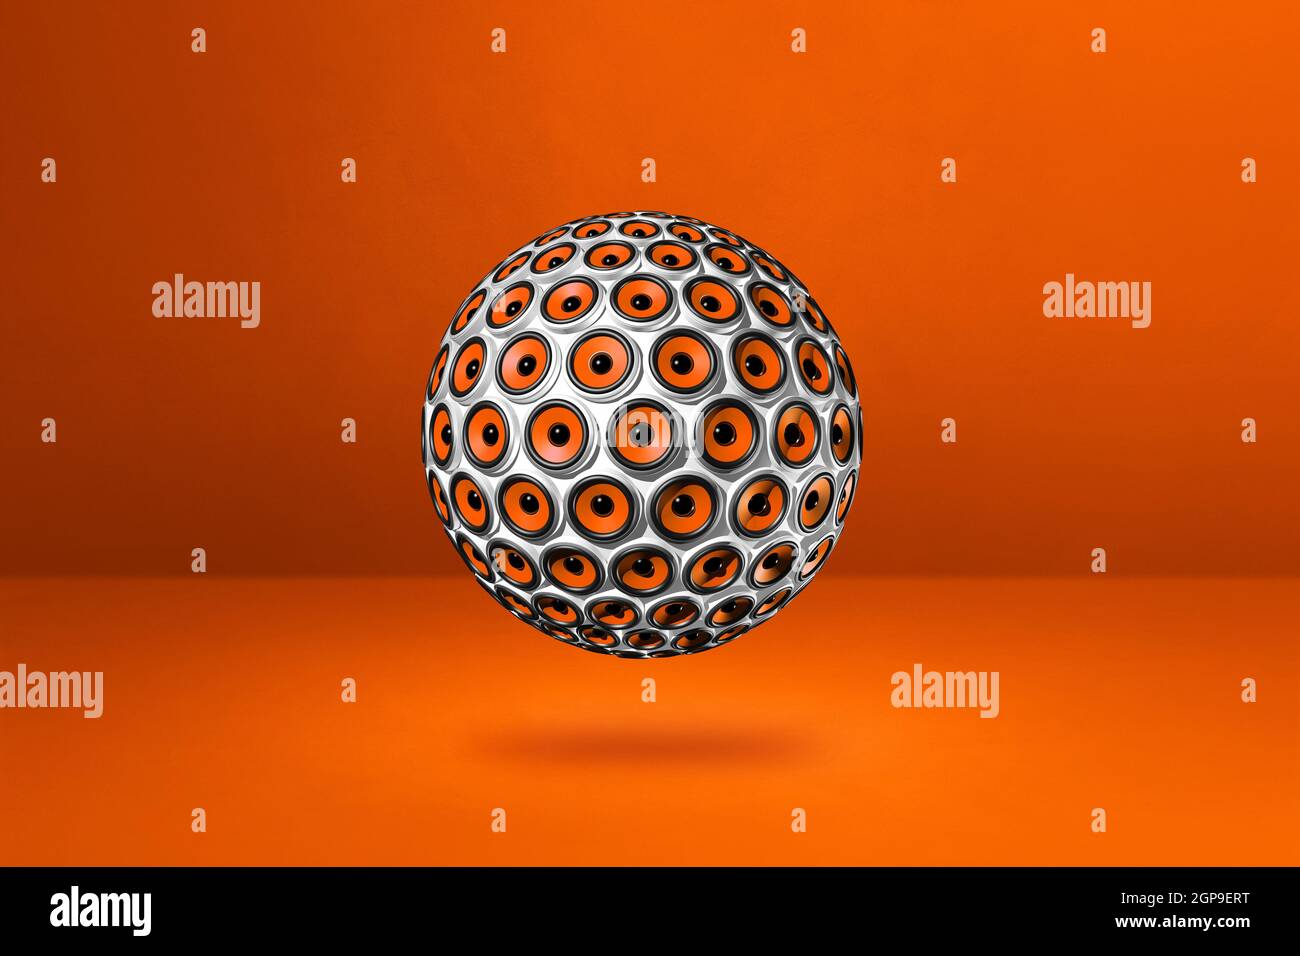 Speakers sphere isolated on a orange studio background. 3D illustration Stock Photo